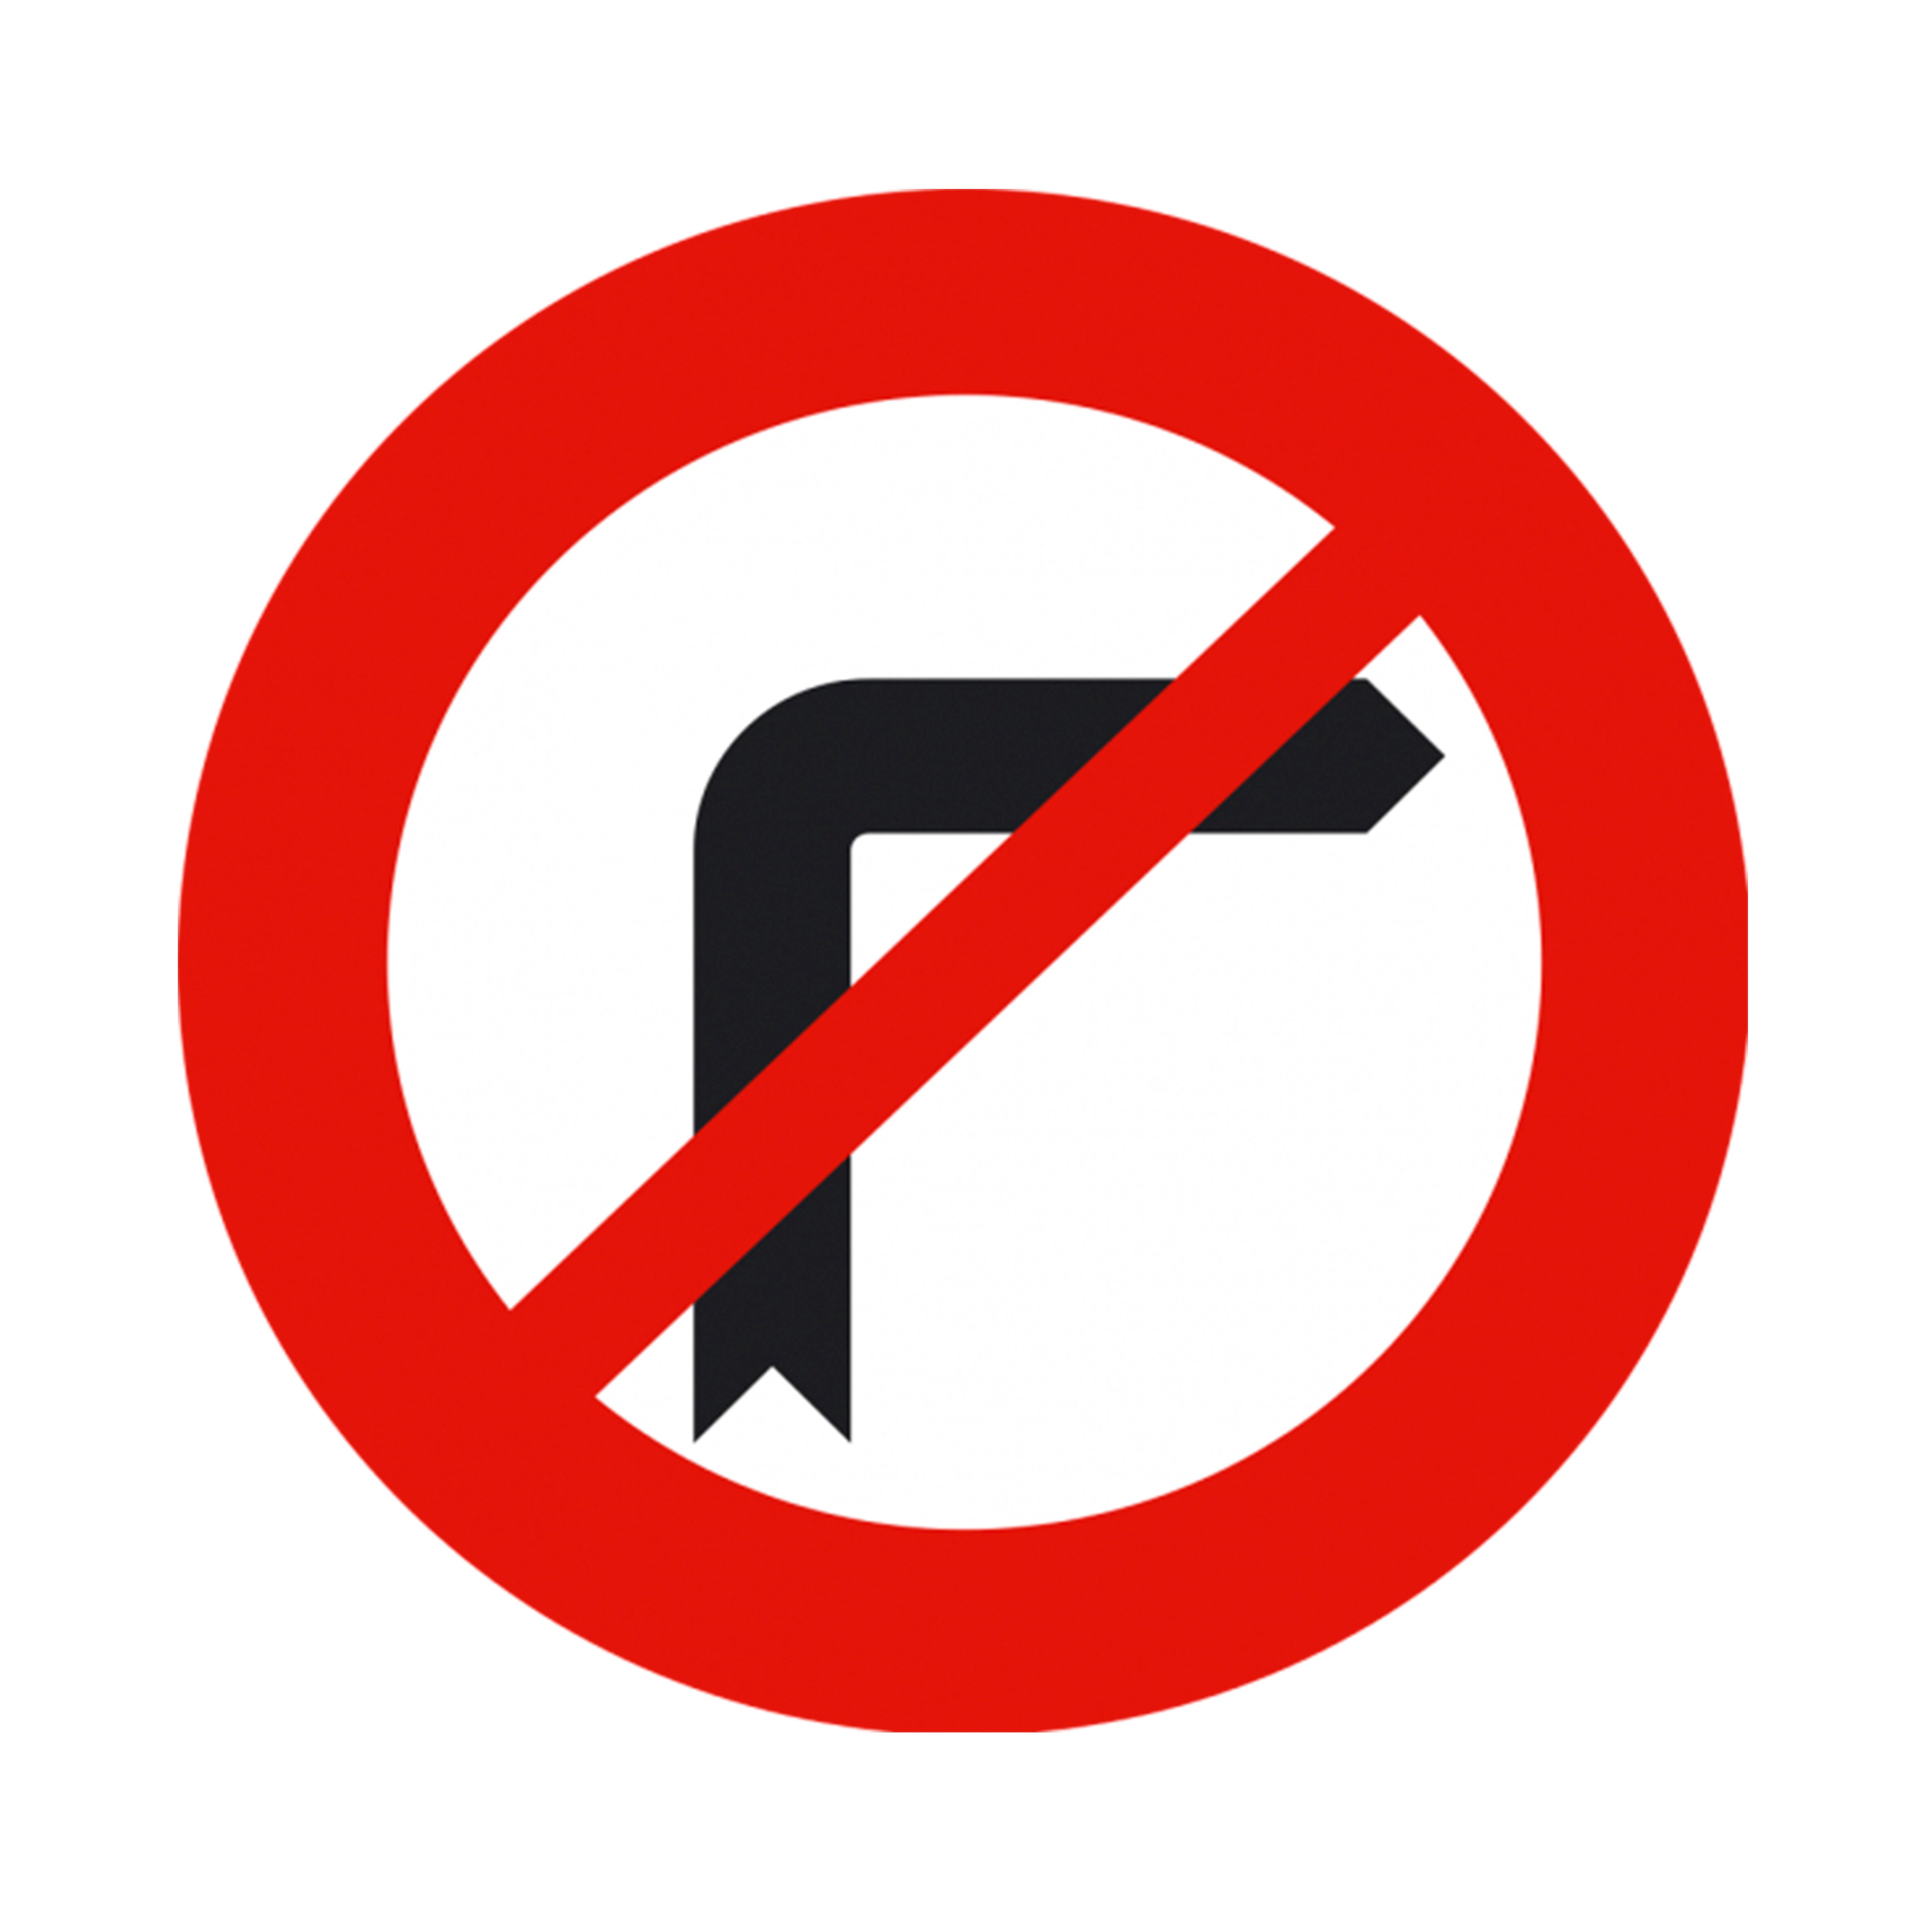 Señal vial giro a la derecha prohibido 60x60 cm